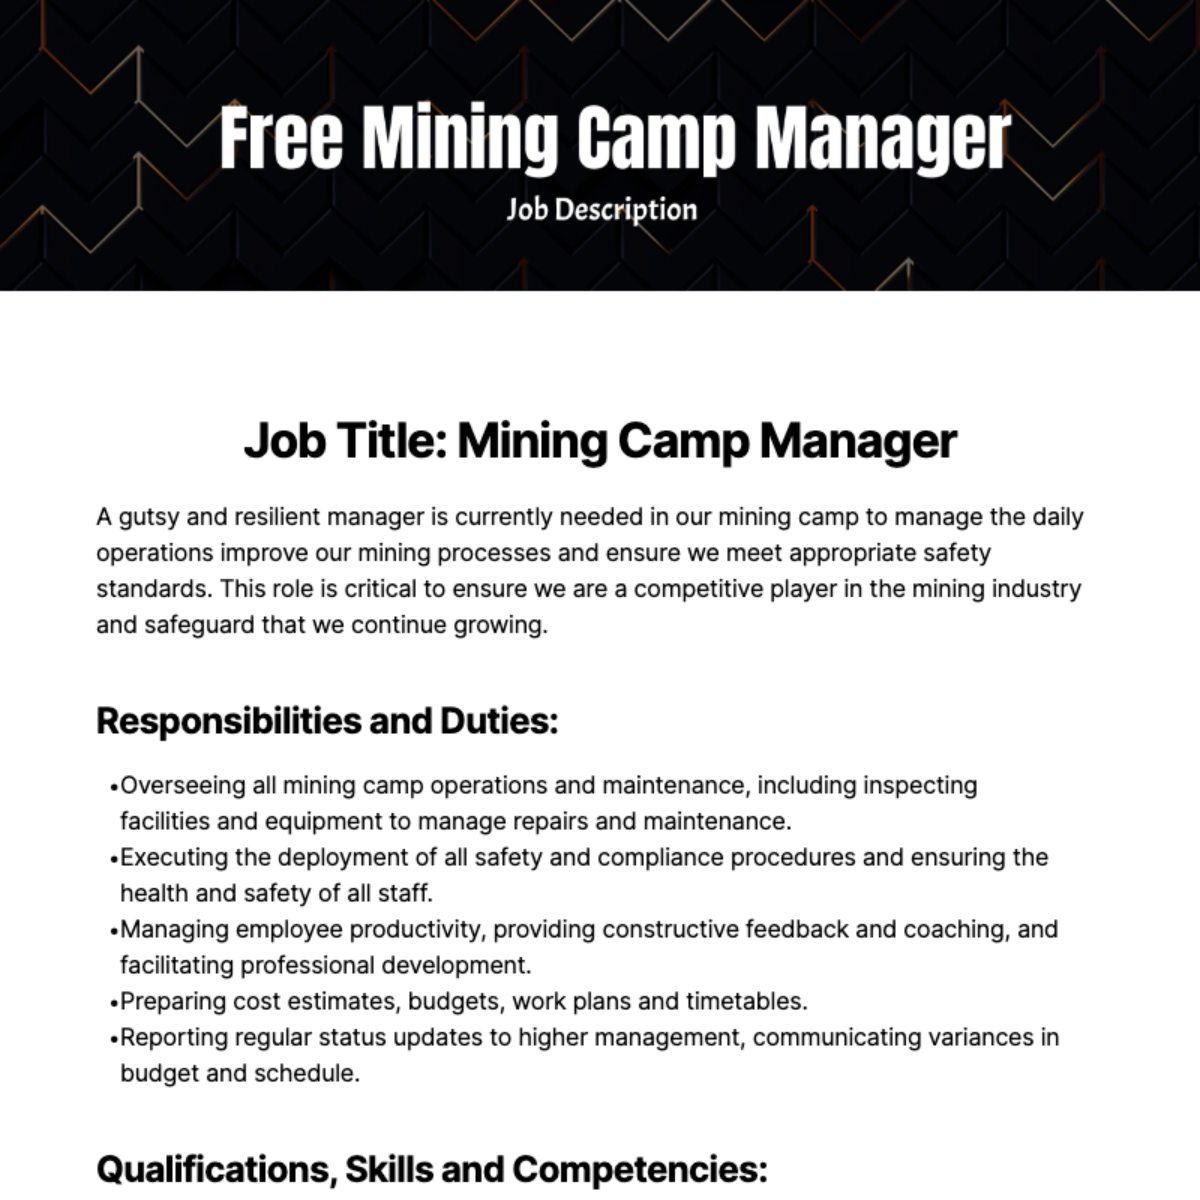 Free Mining Camp Manager Job Description Template